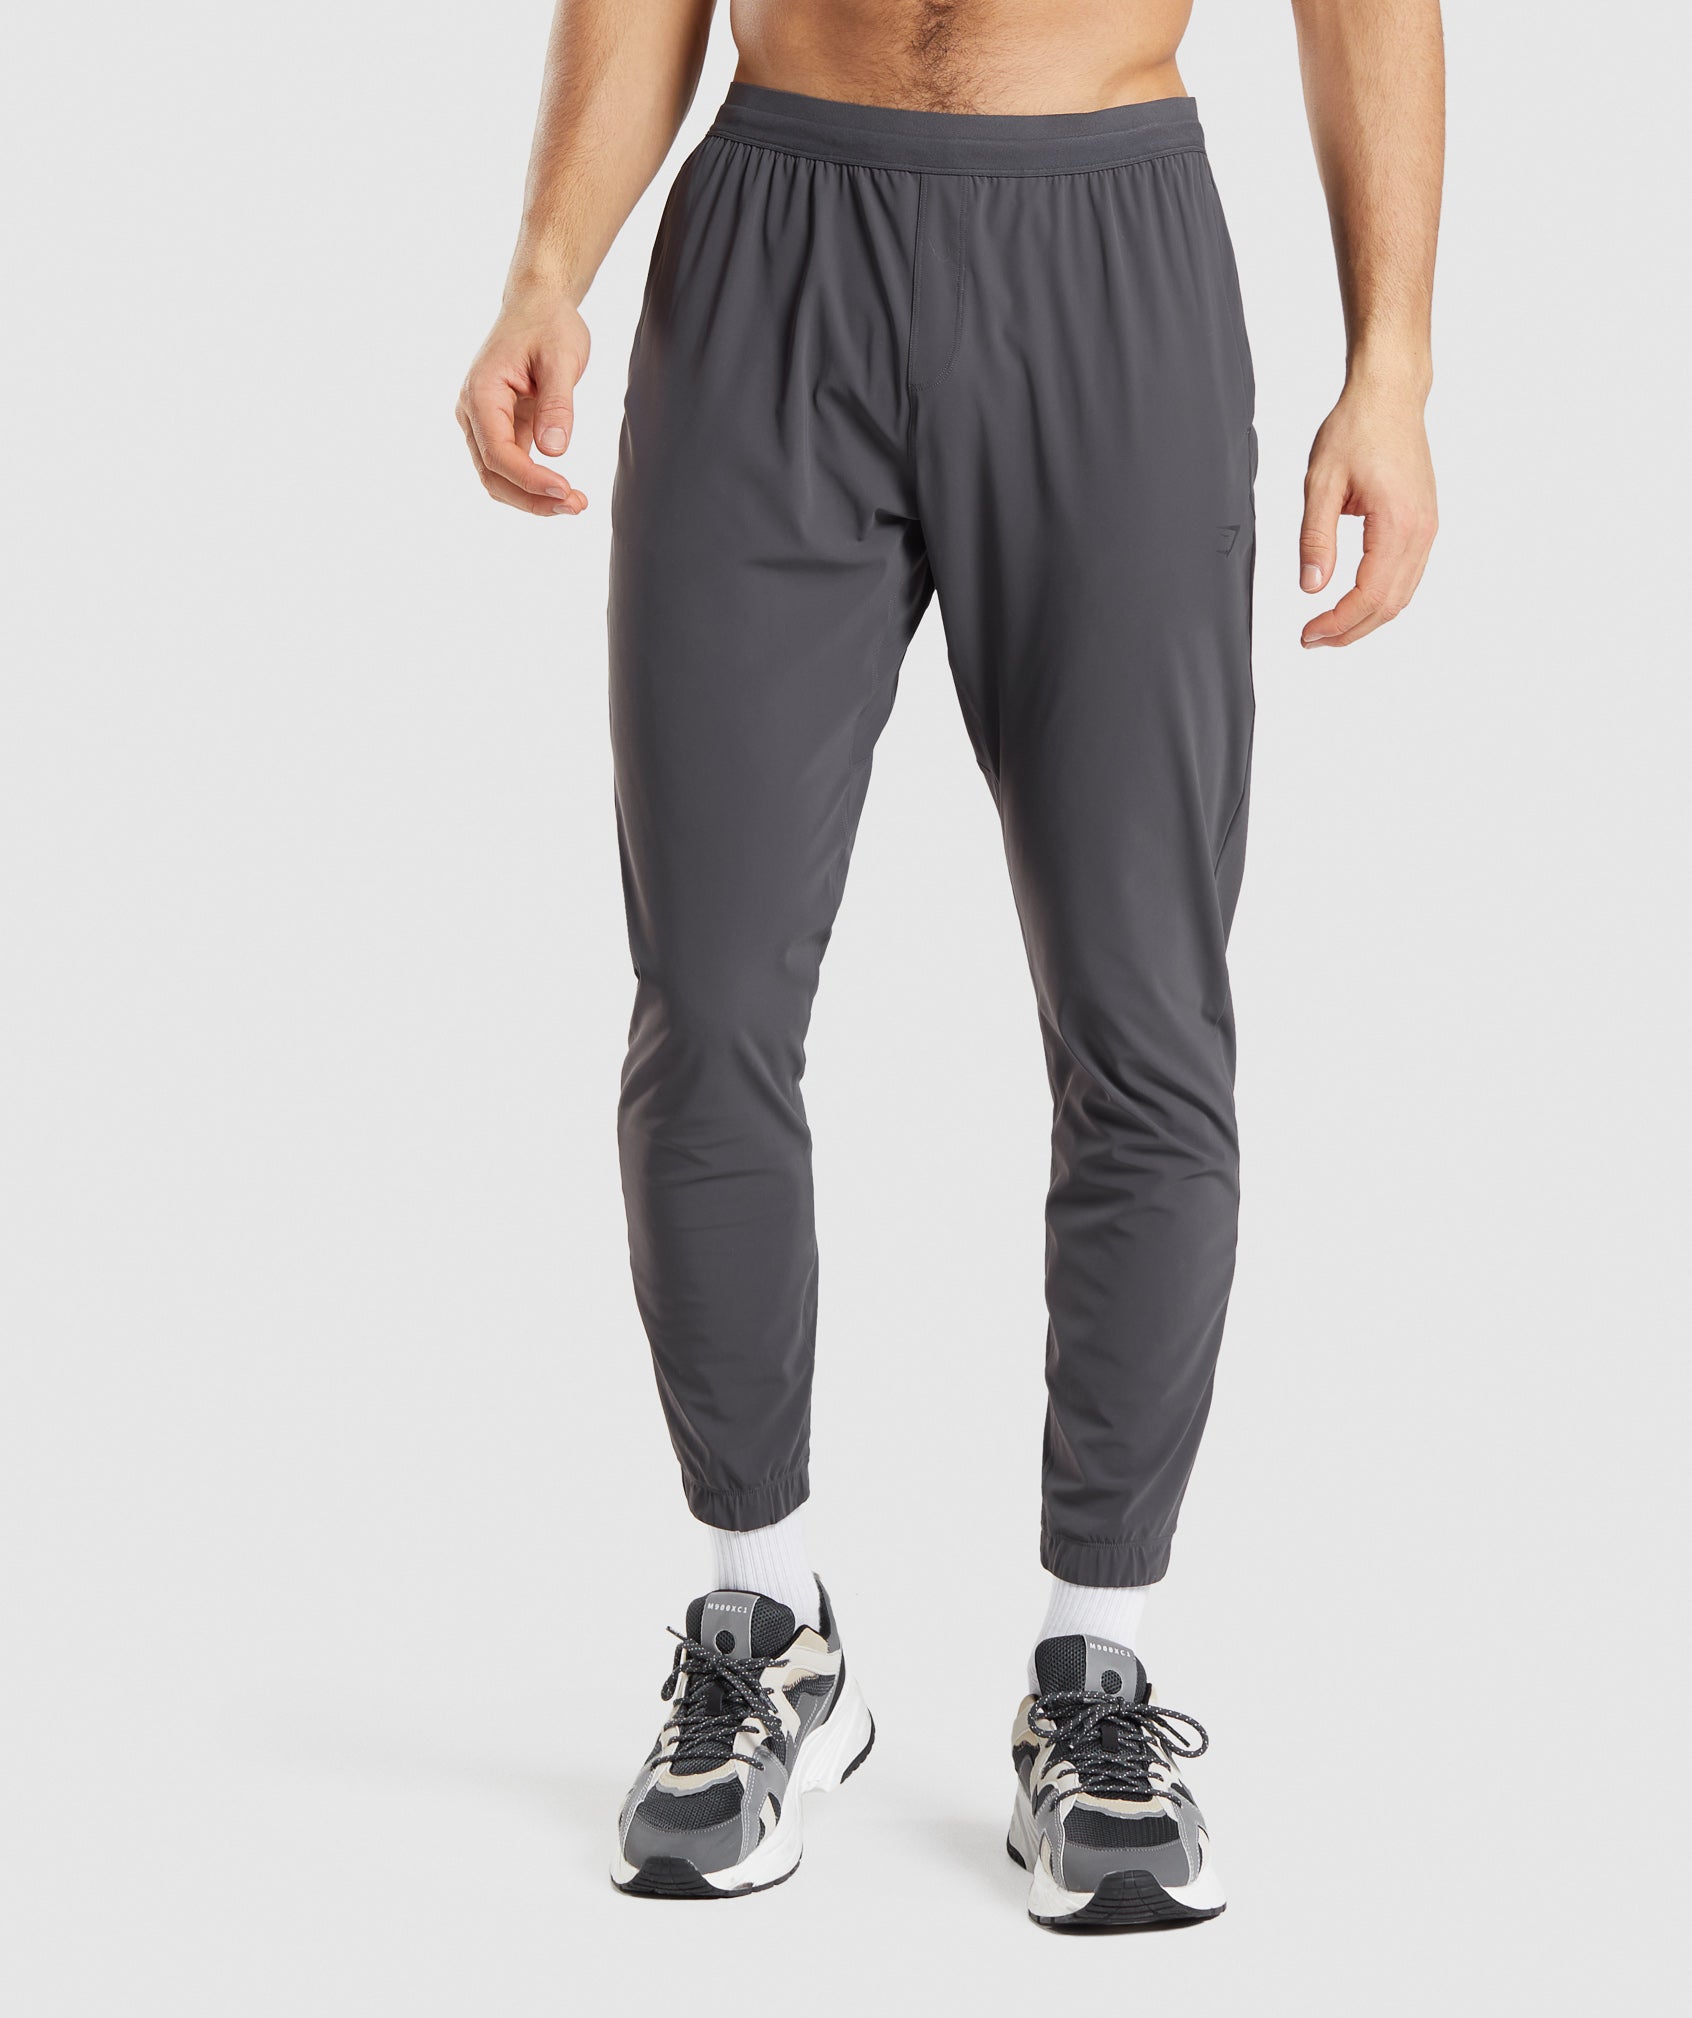 Gymshark Sweatpants Mens Medium Gray Slim Athletic Fit Zip Pocket